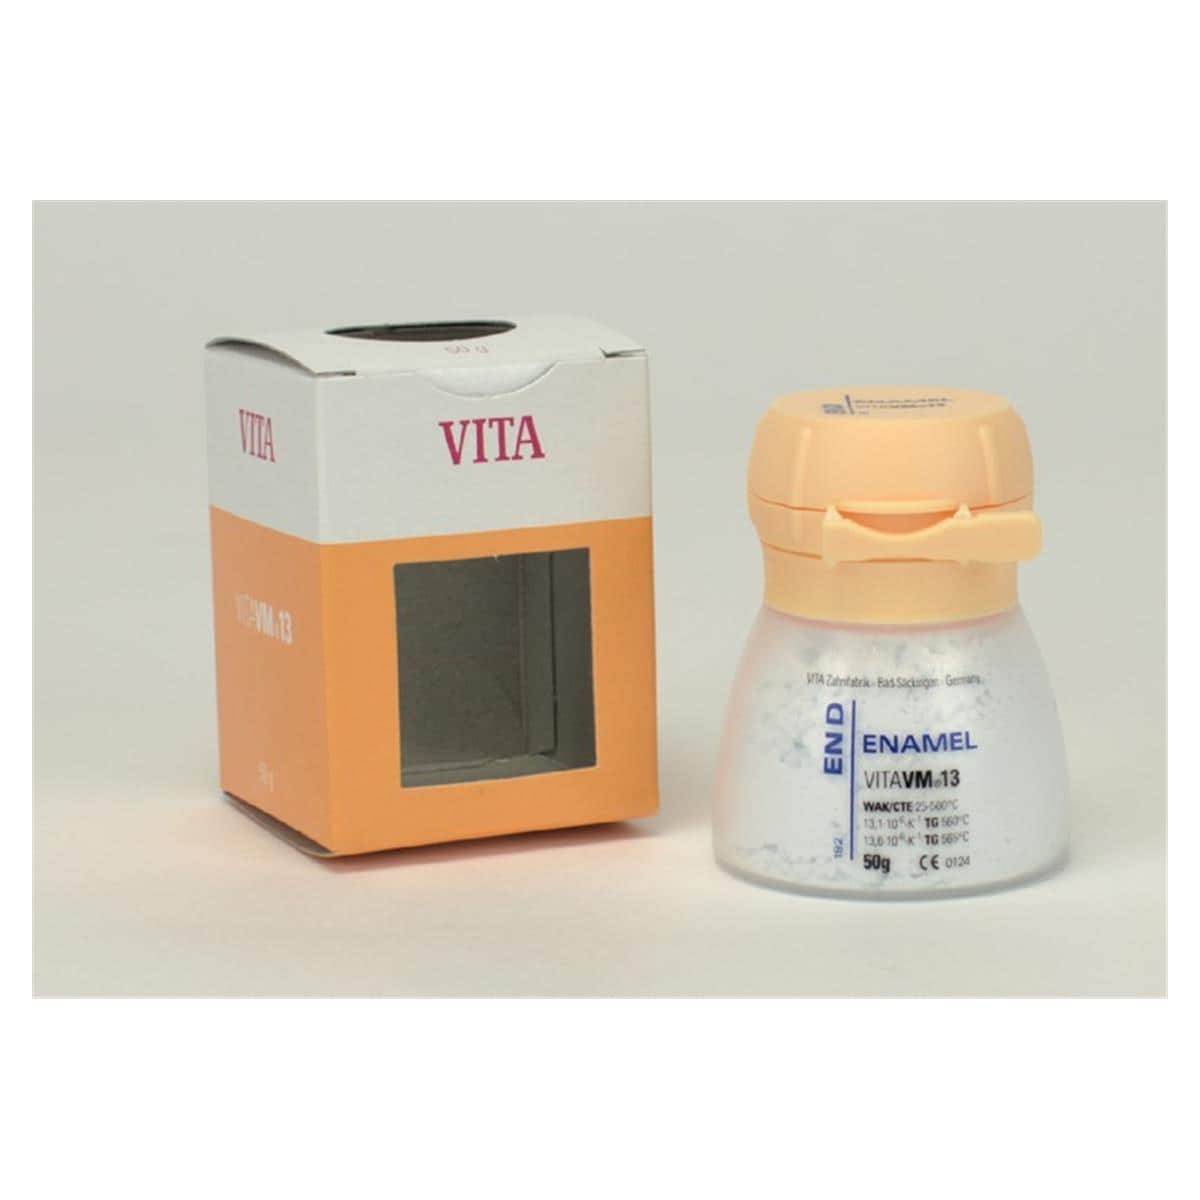 VM13 VITA - Enamel - END - Le pot de 50 g